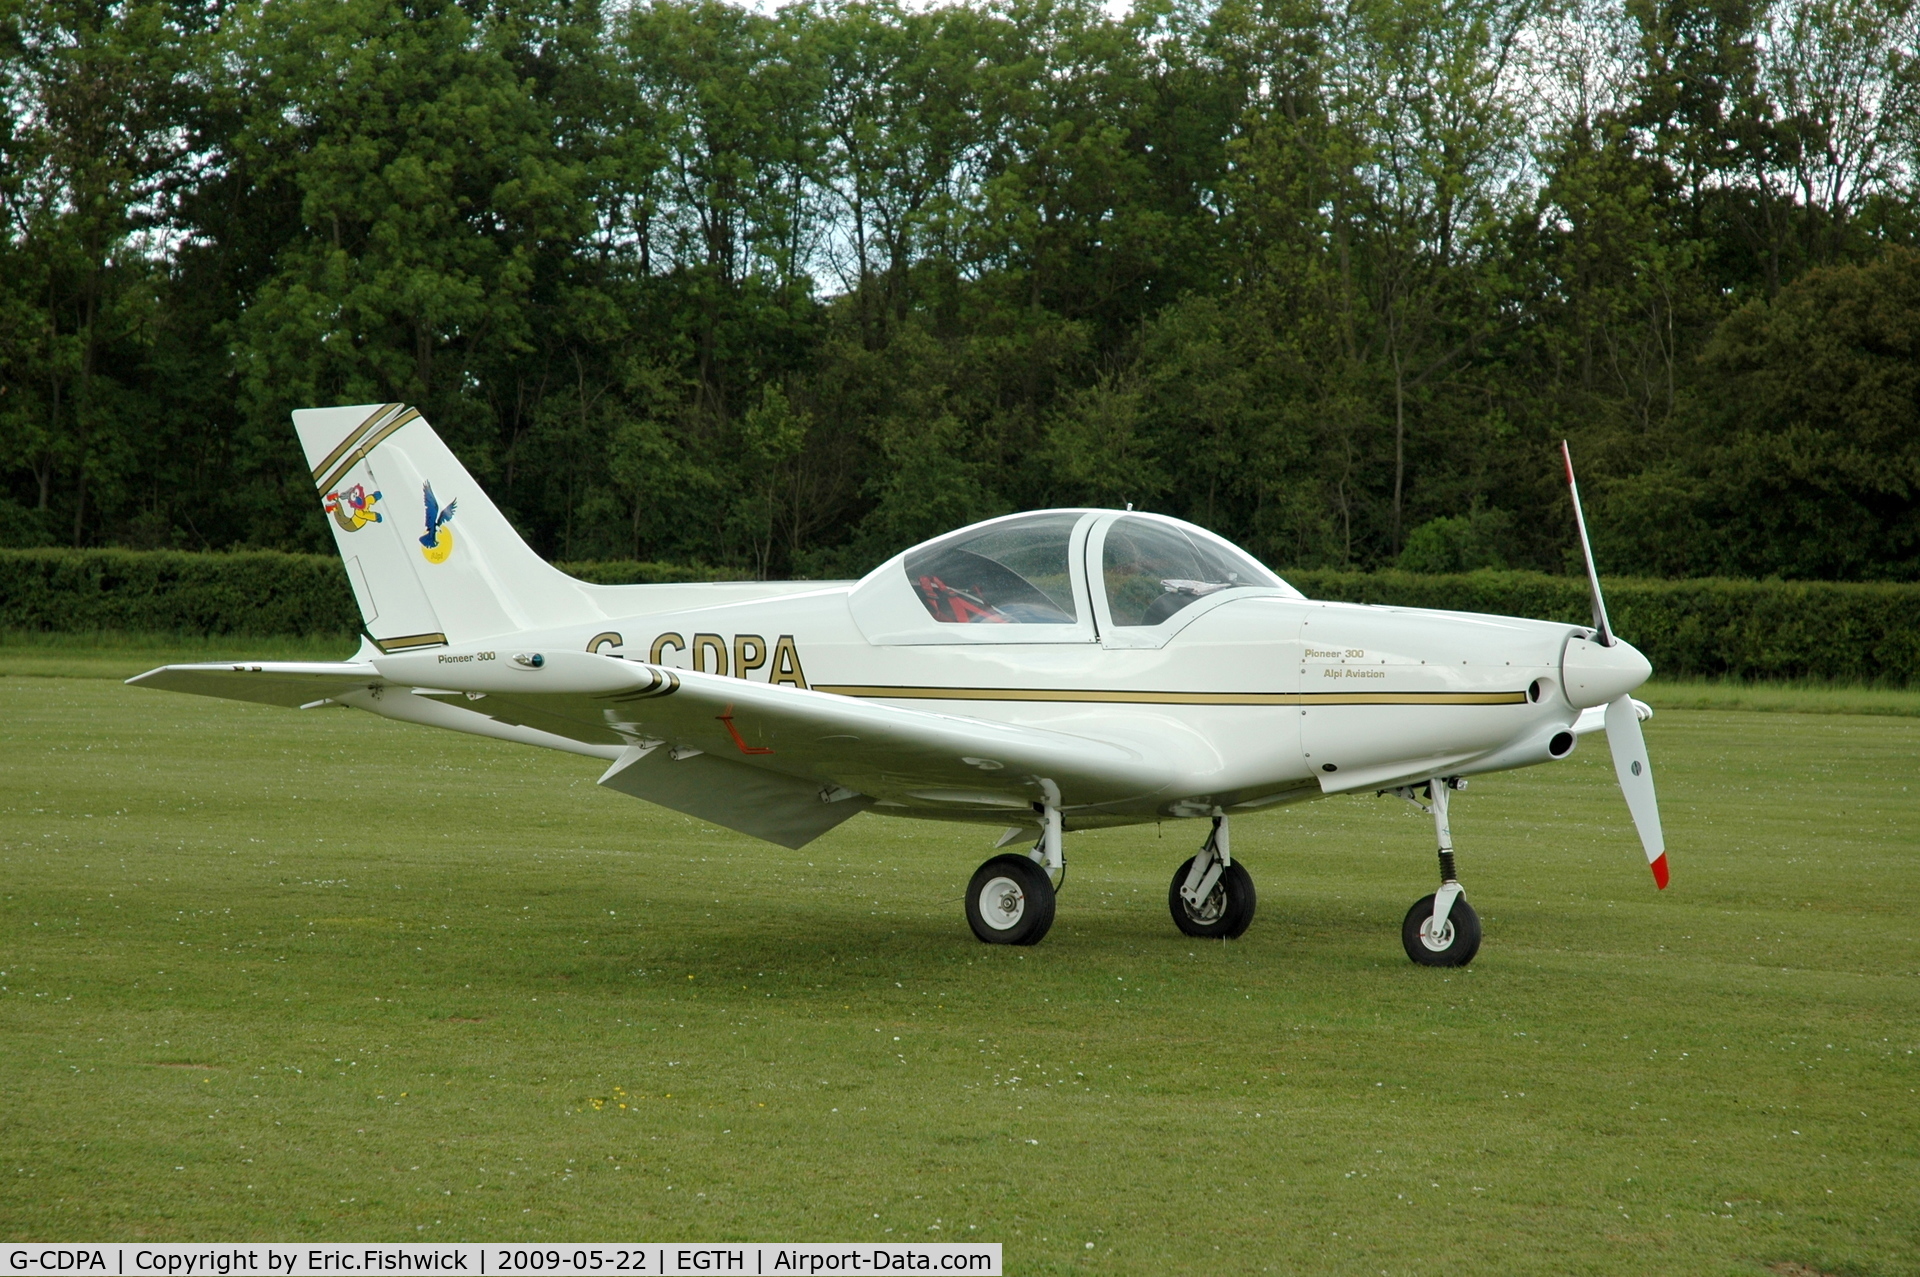 G-CDPA, 2005 Alpi Aviation Pioneer 300 C/N PFA 330-14415, 3. G-CDPA visiting Shuttleworth (Old Warden) Aerodrome.